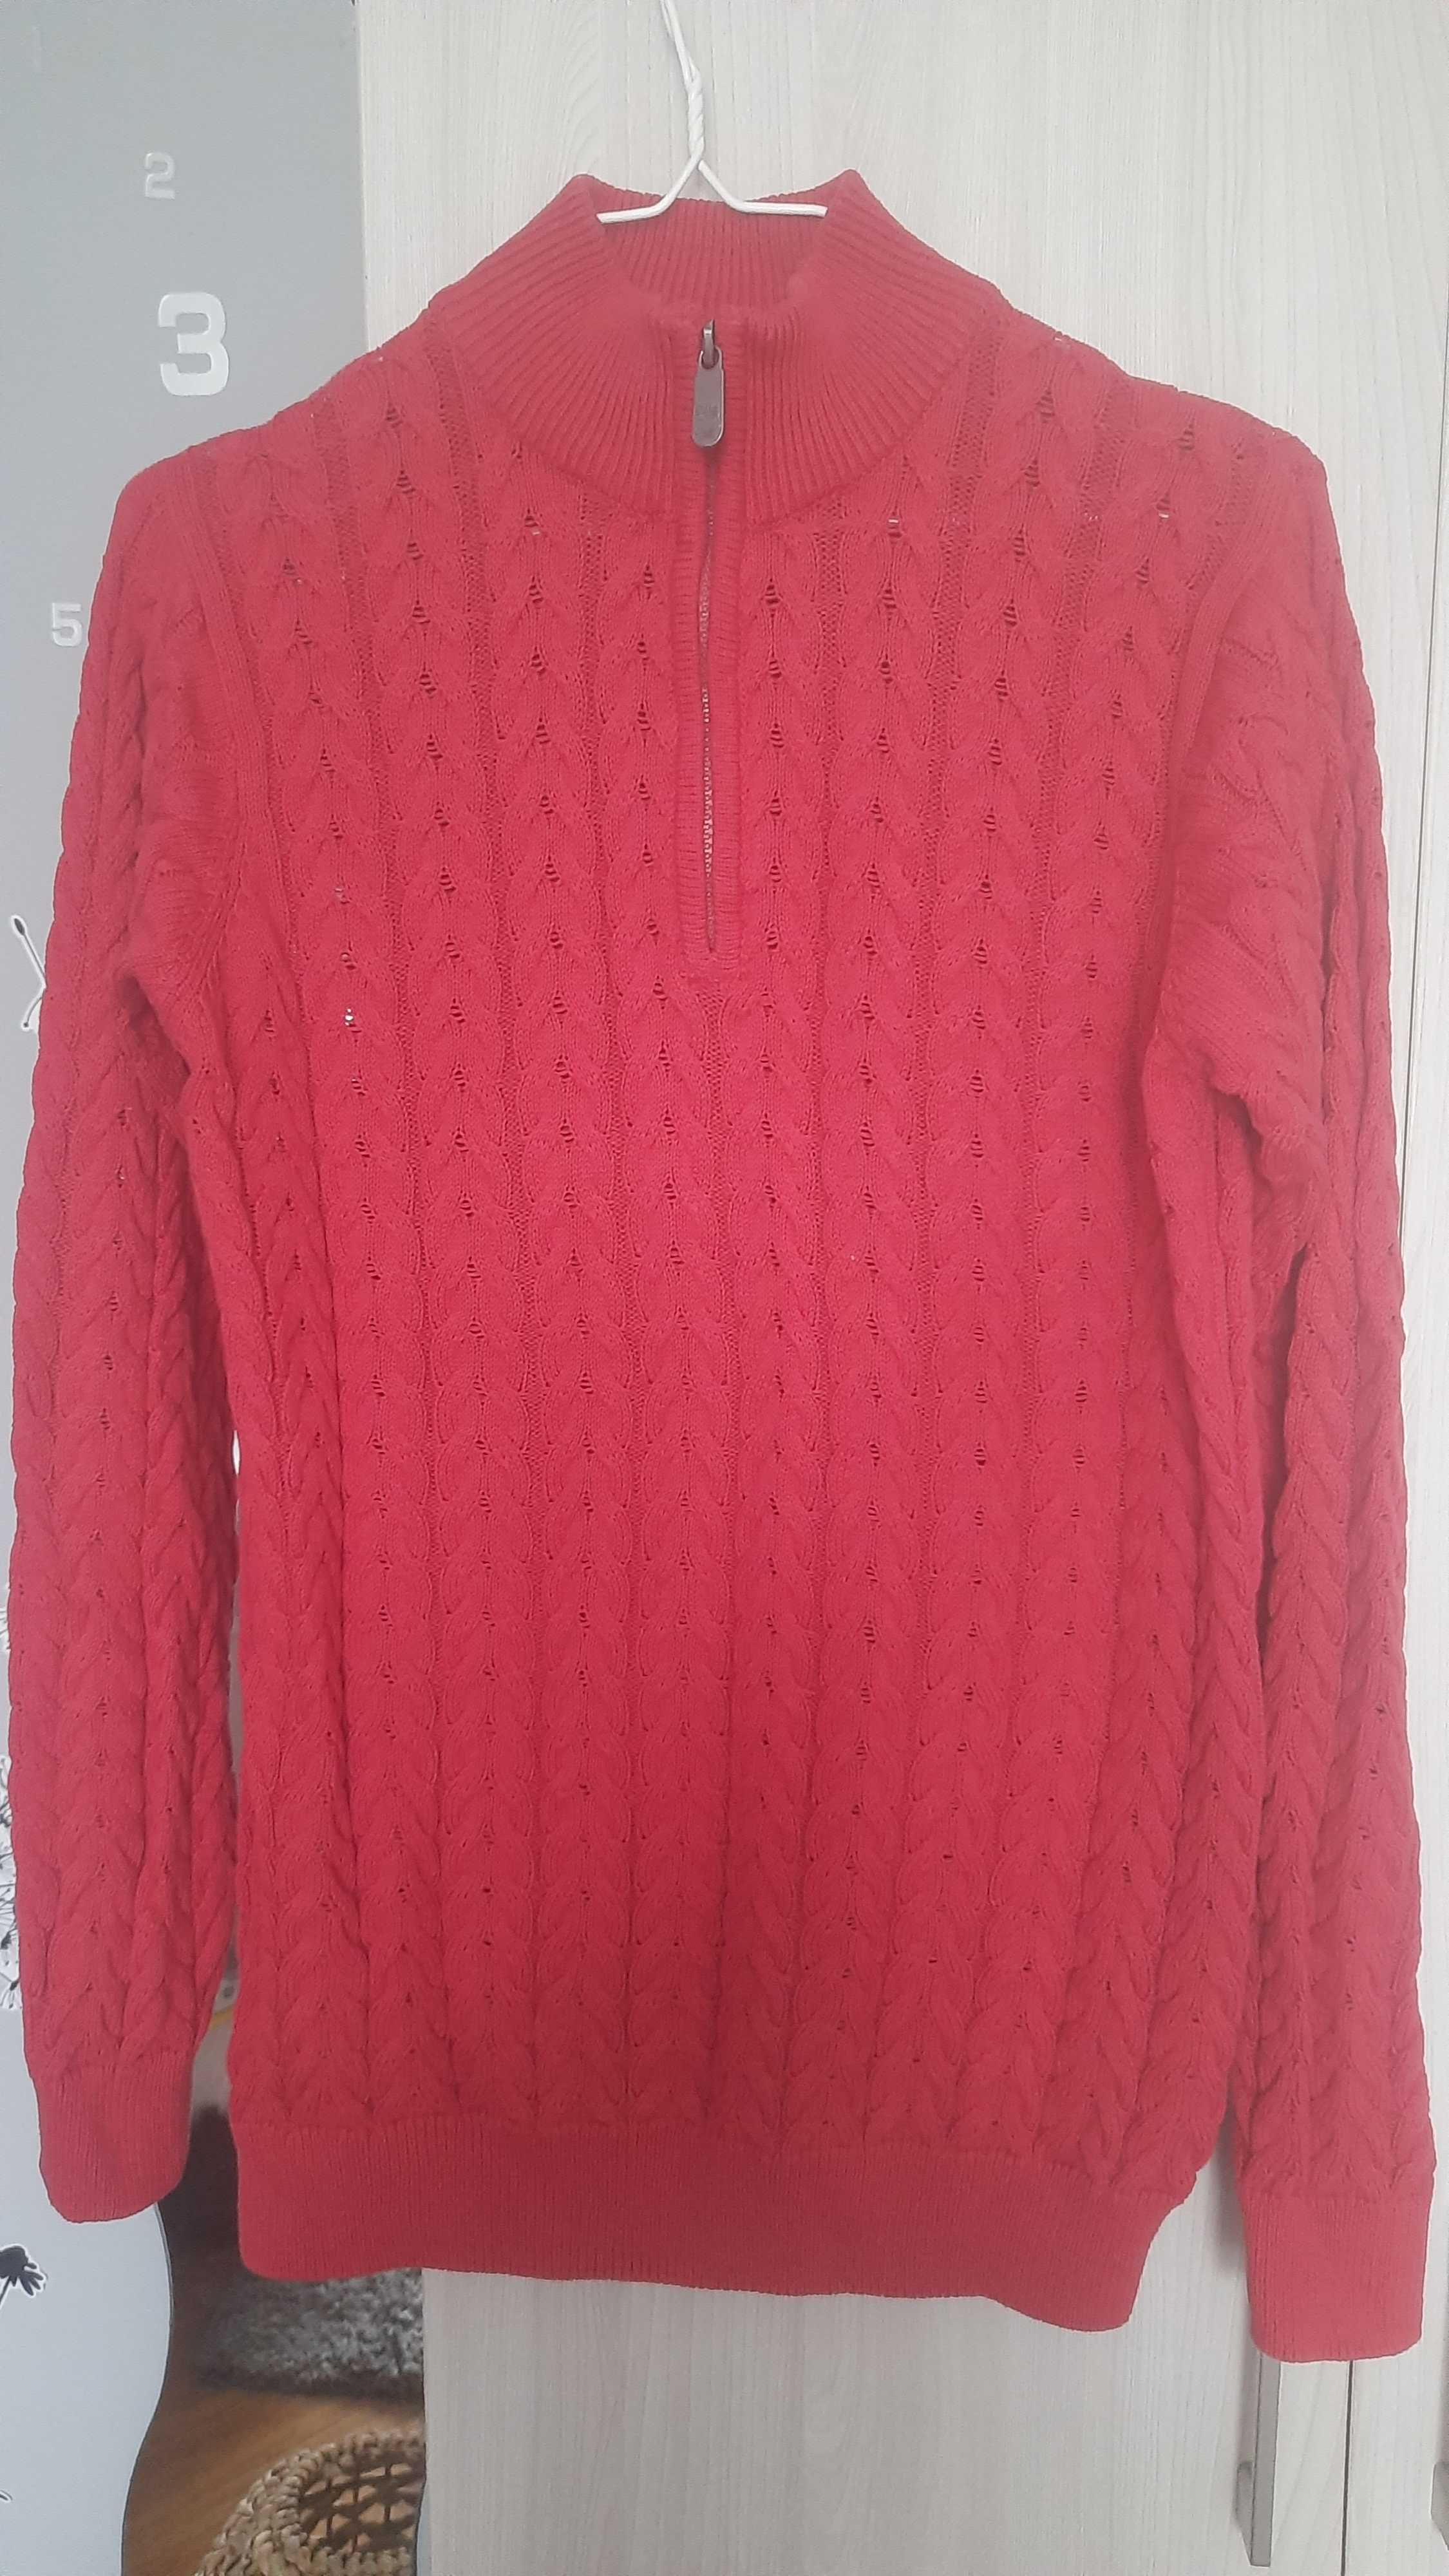 Sweterek w kolorze malinowym.